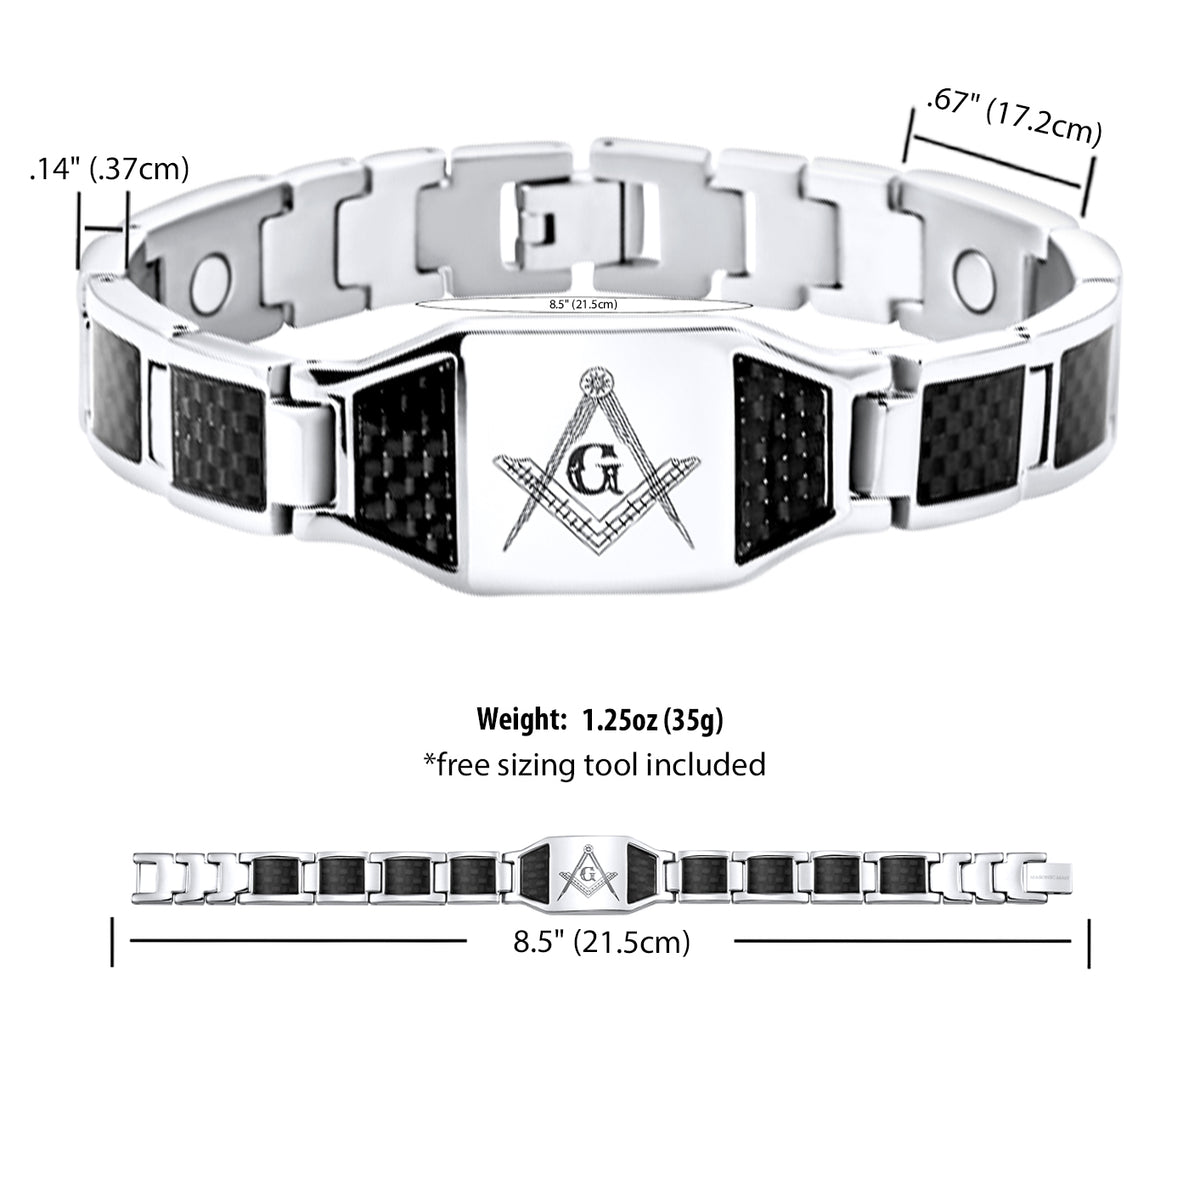 MasonicMan Titanium Masonic Bracelet with Black Carbon Fiber